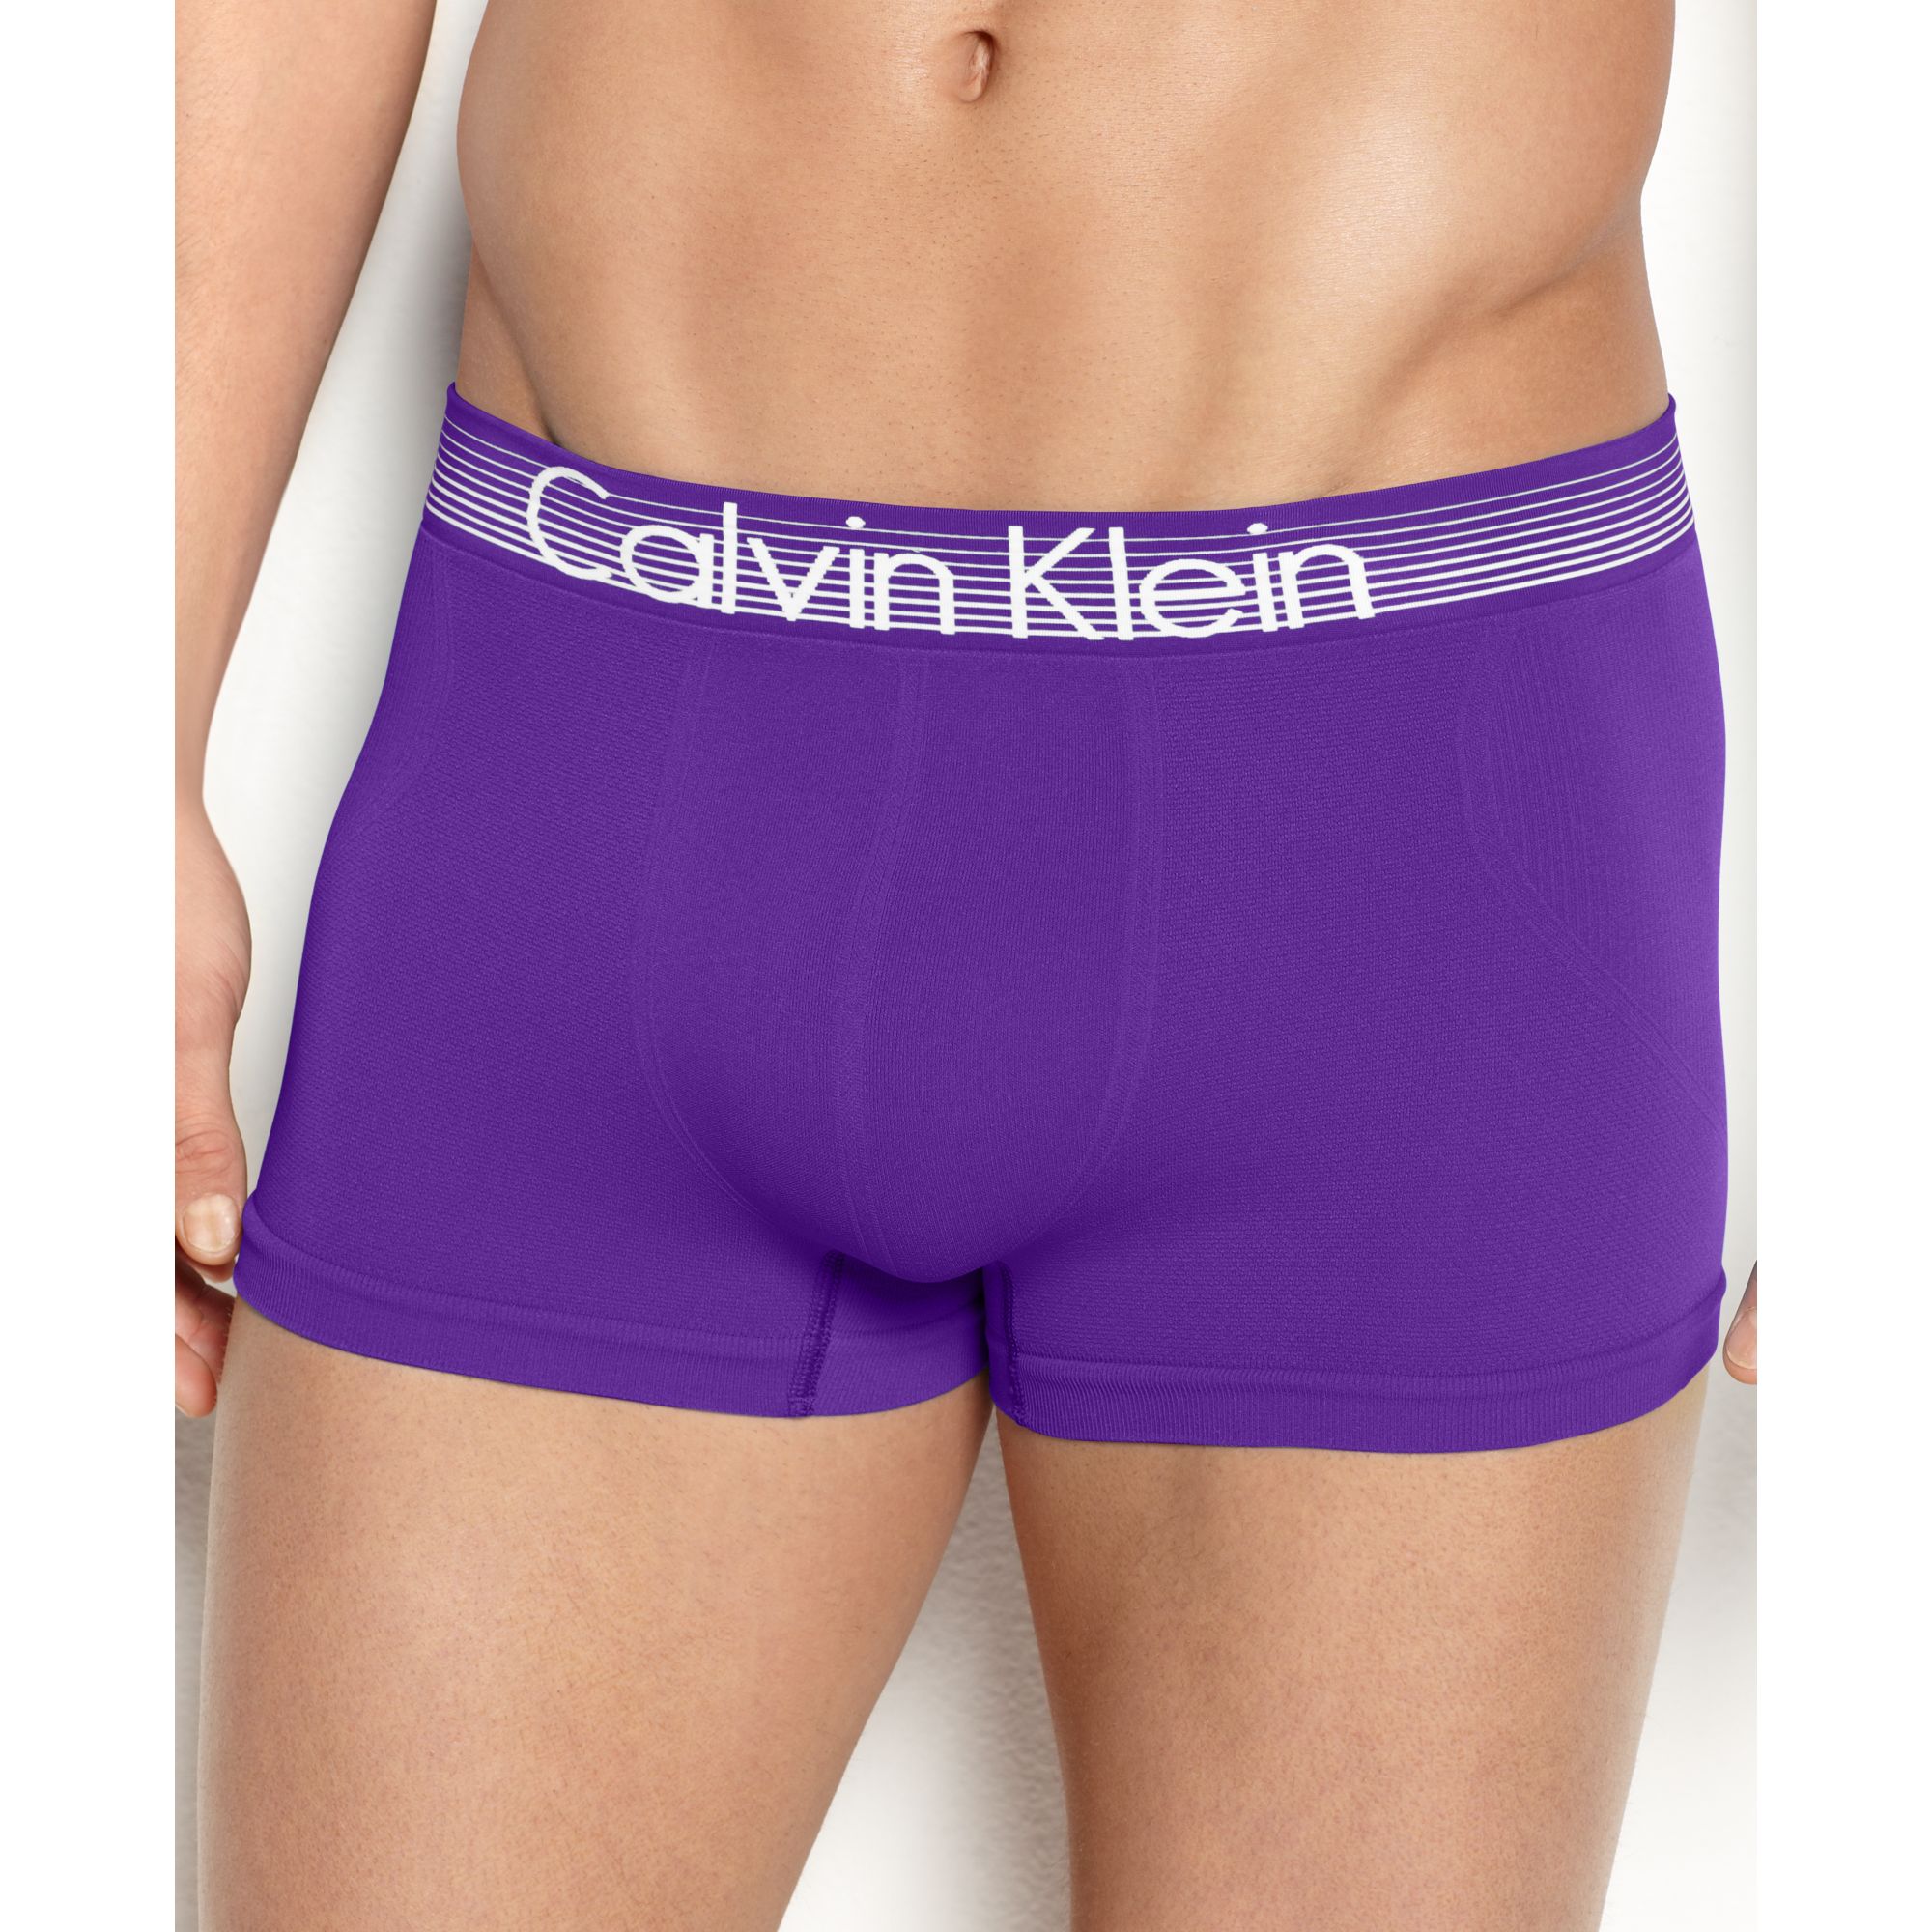 Lyst - Calvin Klein Concept Microfiber Low Rise Trunk in Purple for Men